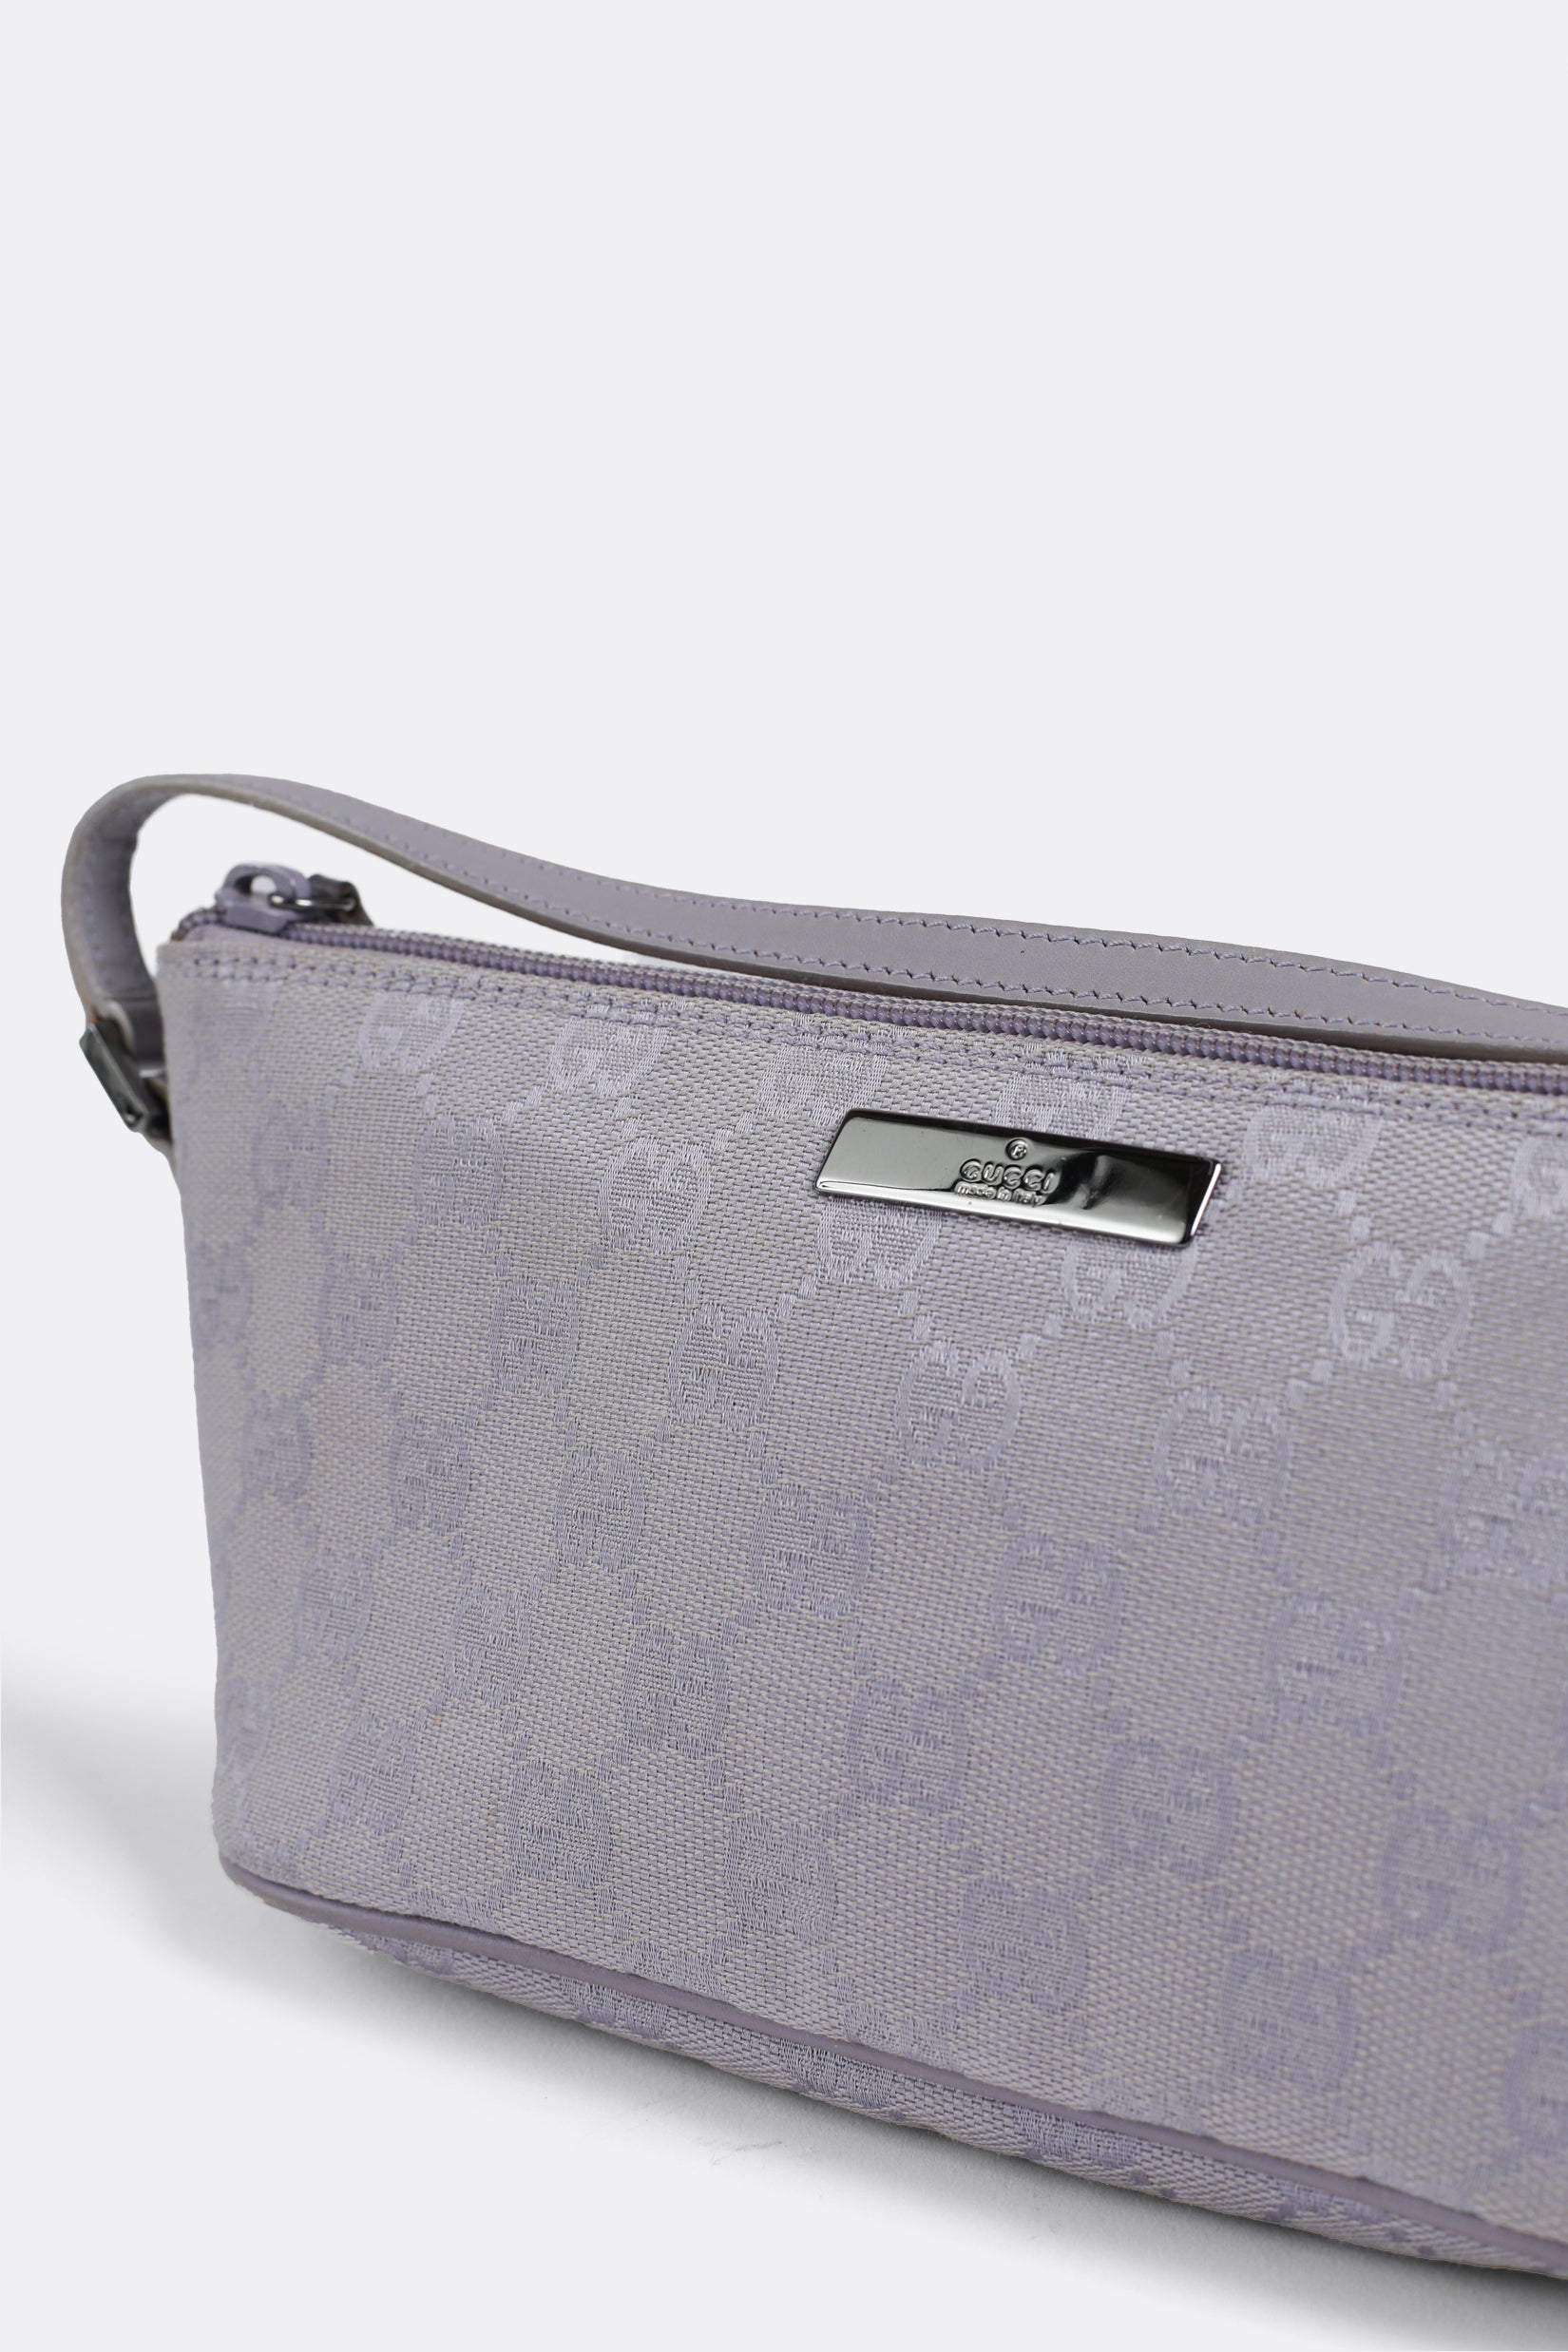 Gucci Vintage Flora Fabric Chain Pochette Shoulder Bag Off-White With Box